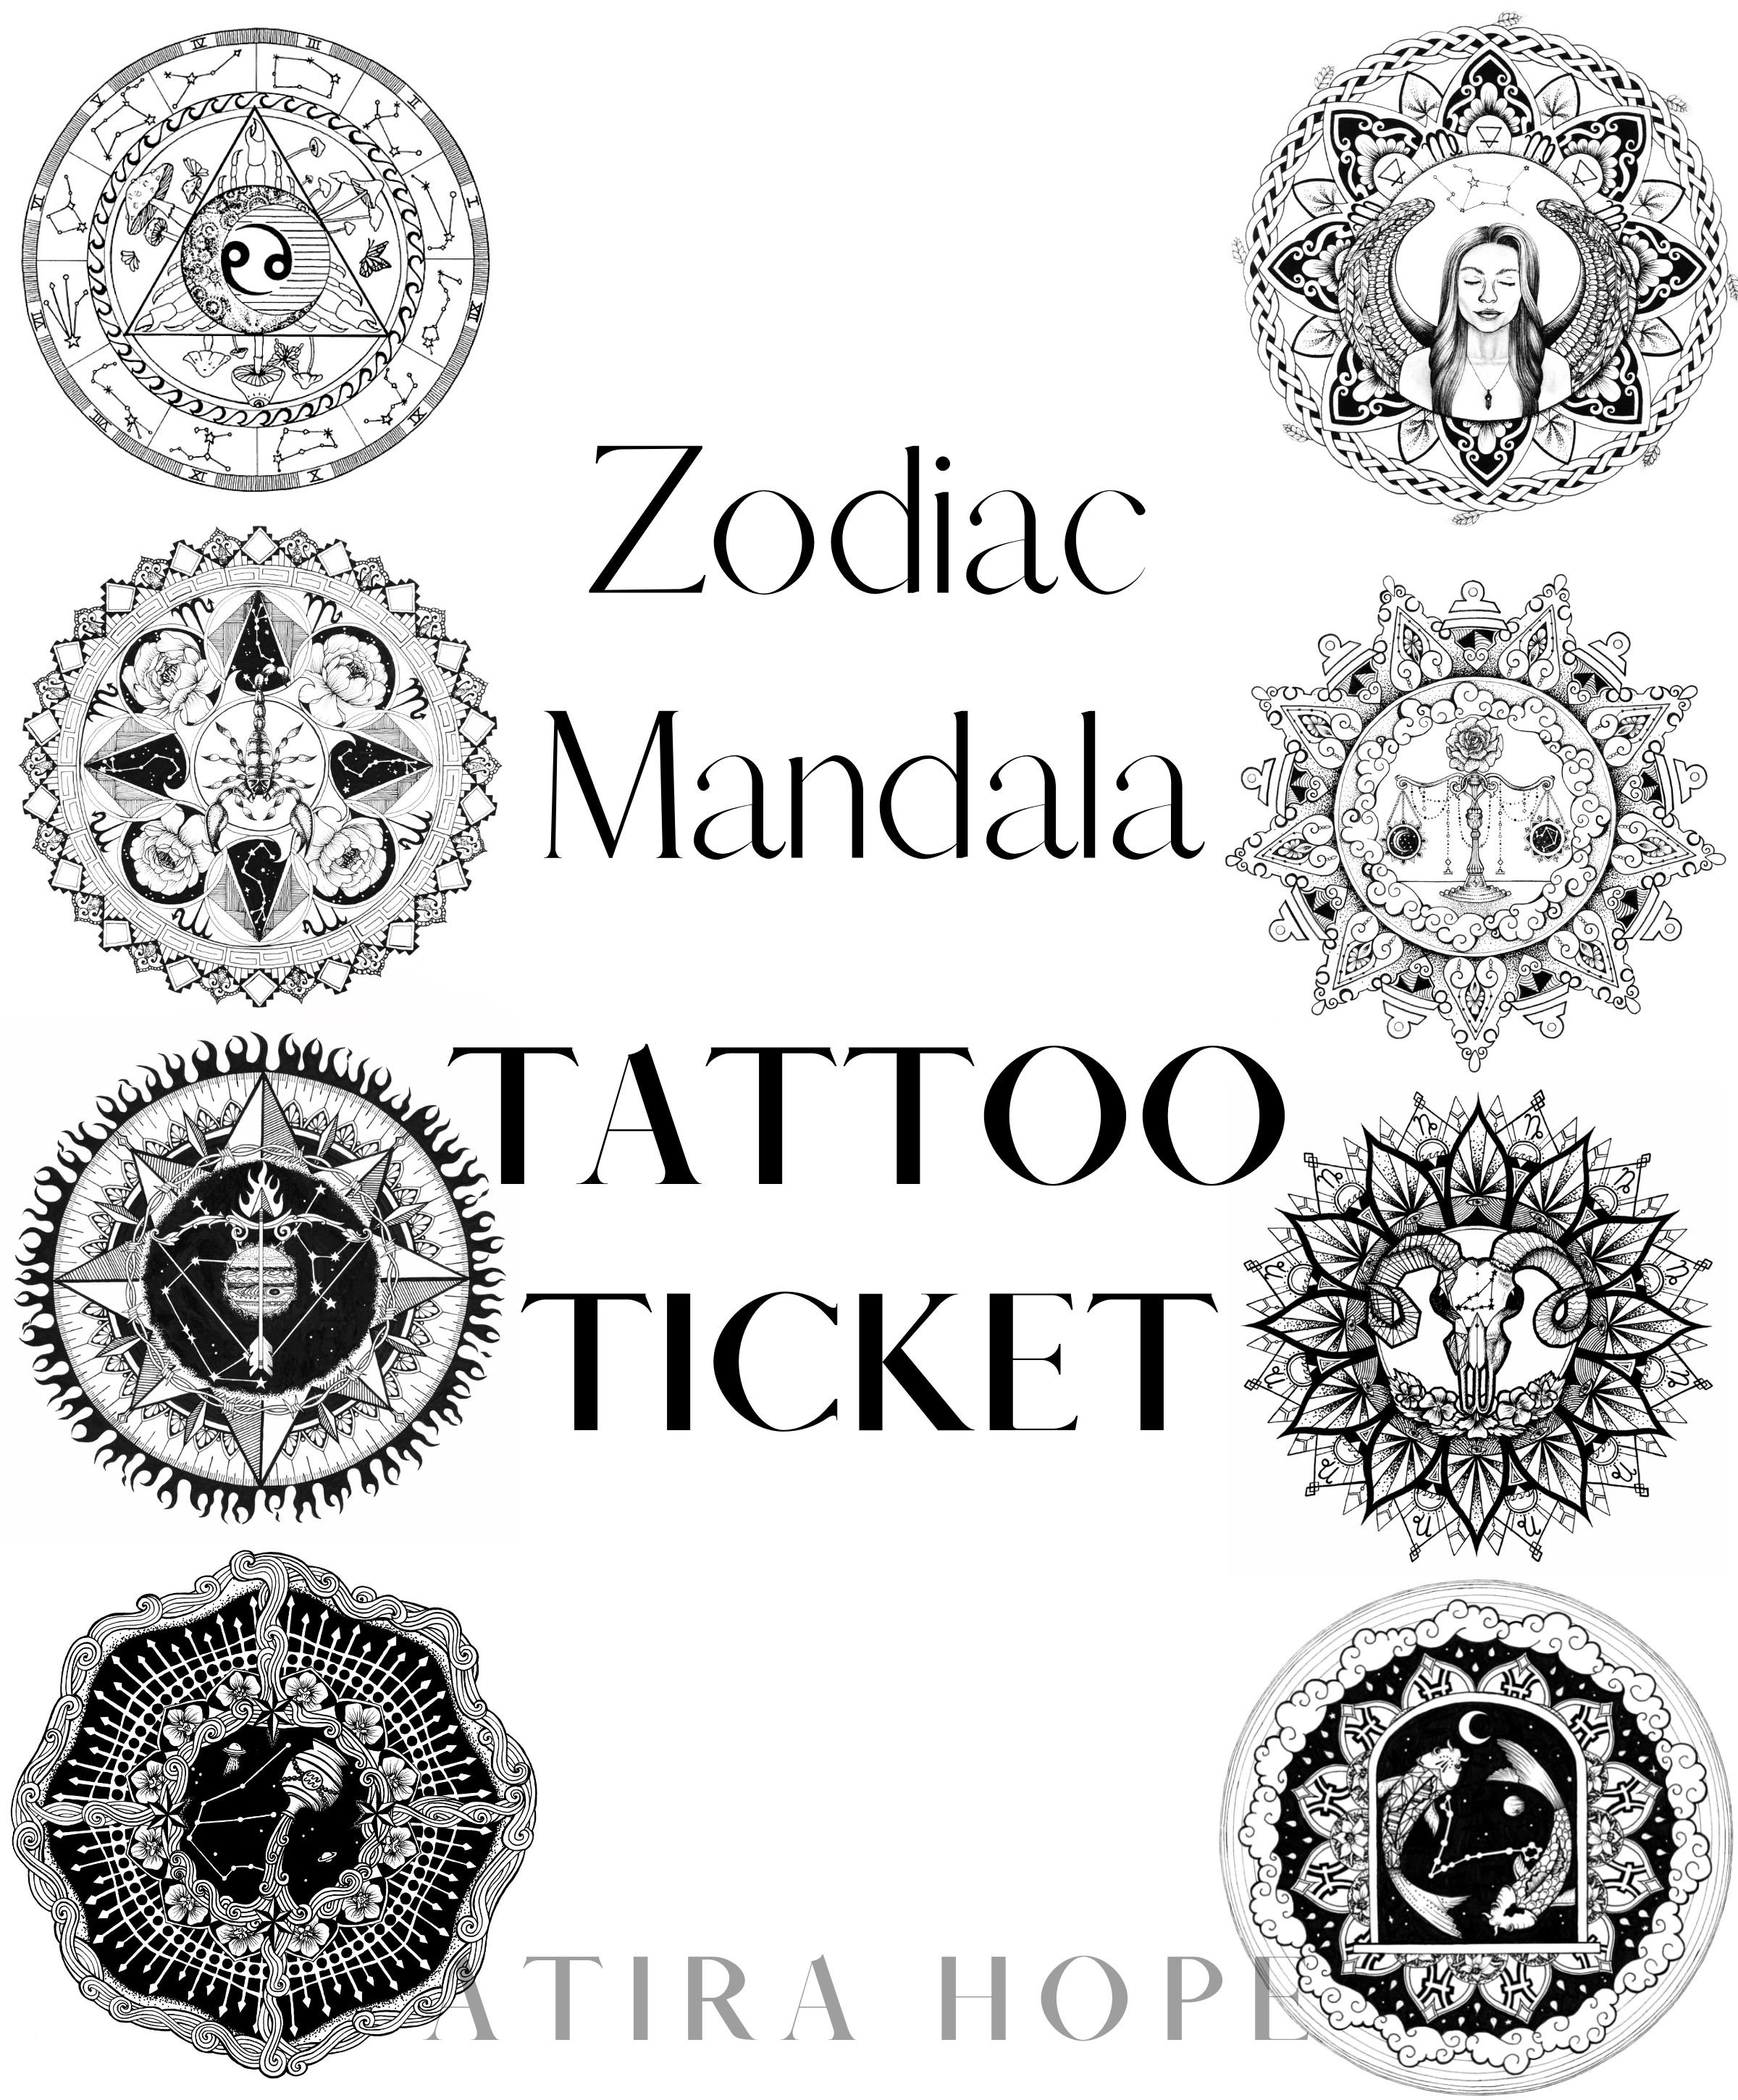 Zodiac Mandala Tattoo Ticket Cancer Virgo Libra Scorpio - Etsy Singapore